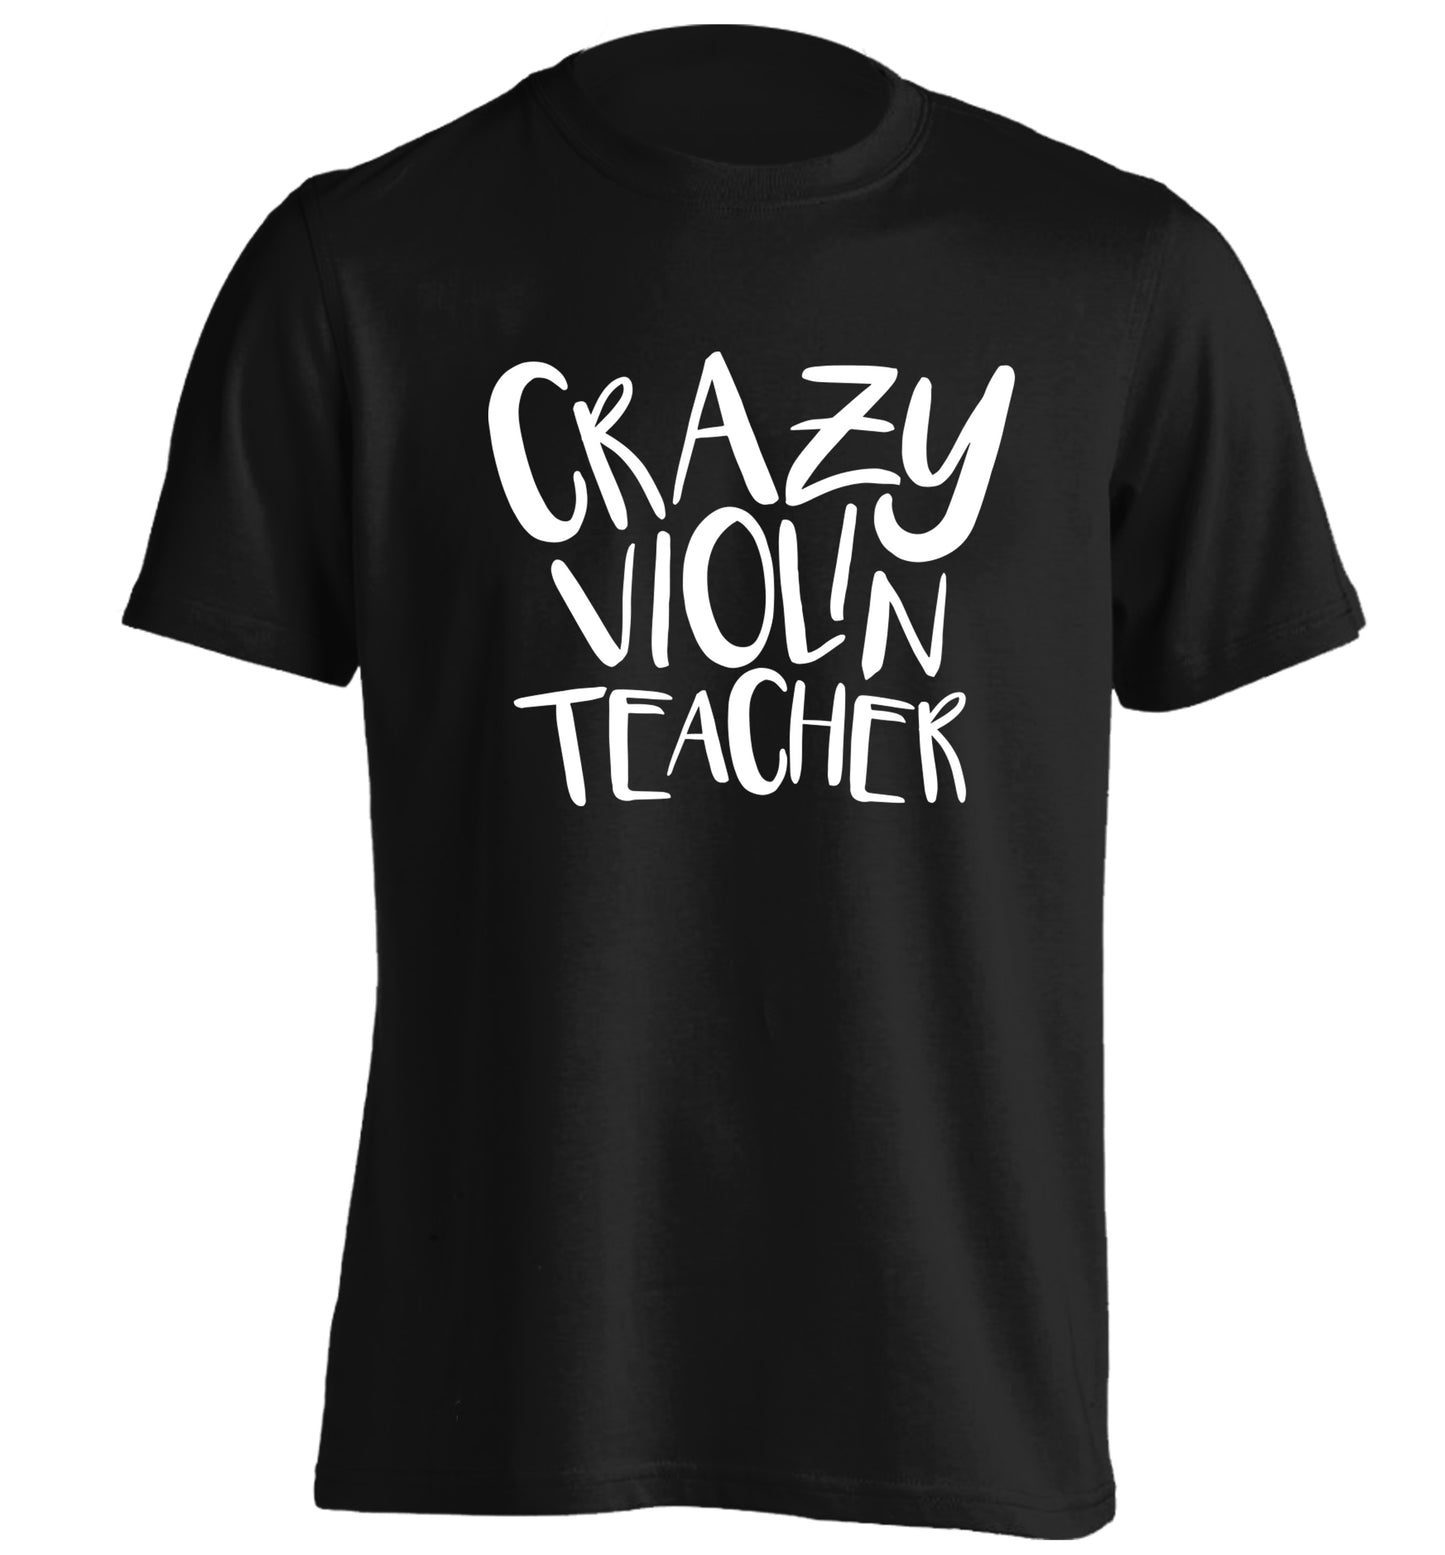 Crazy violin teacher adults unisex black Tshirt 2XL